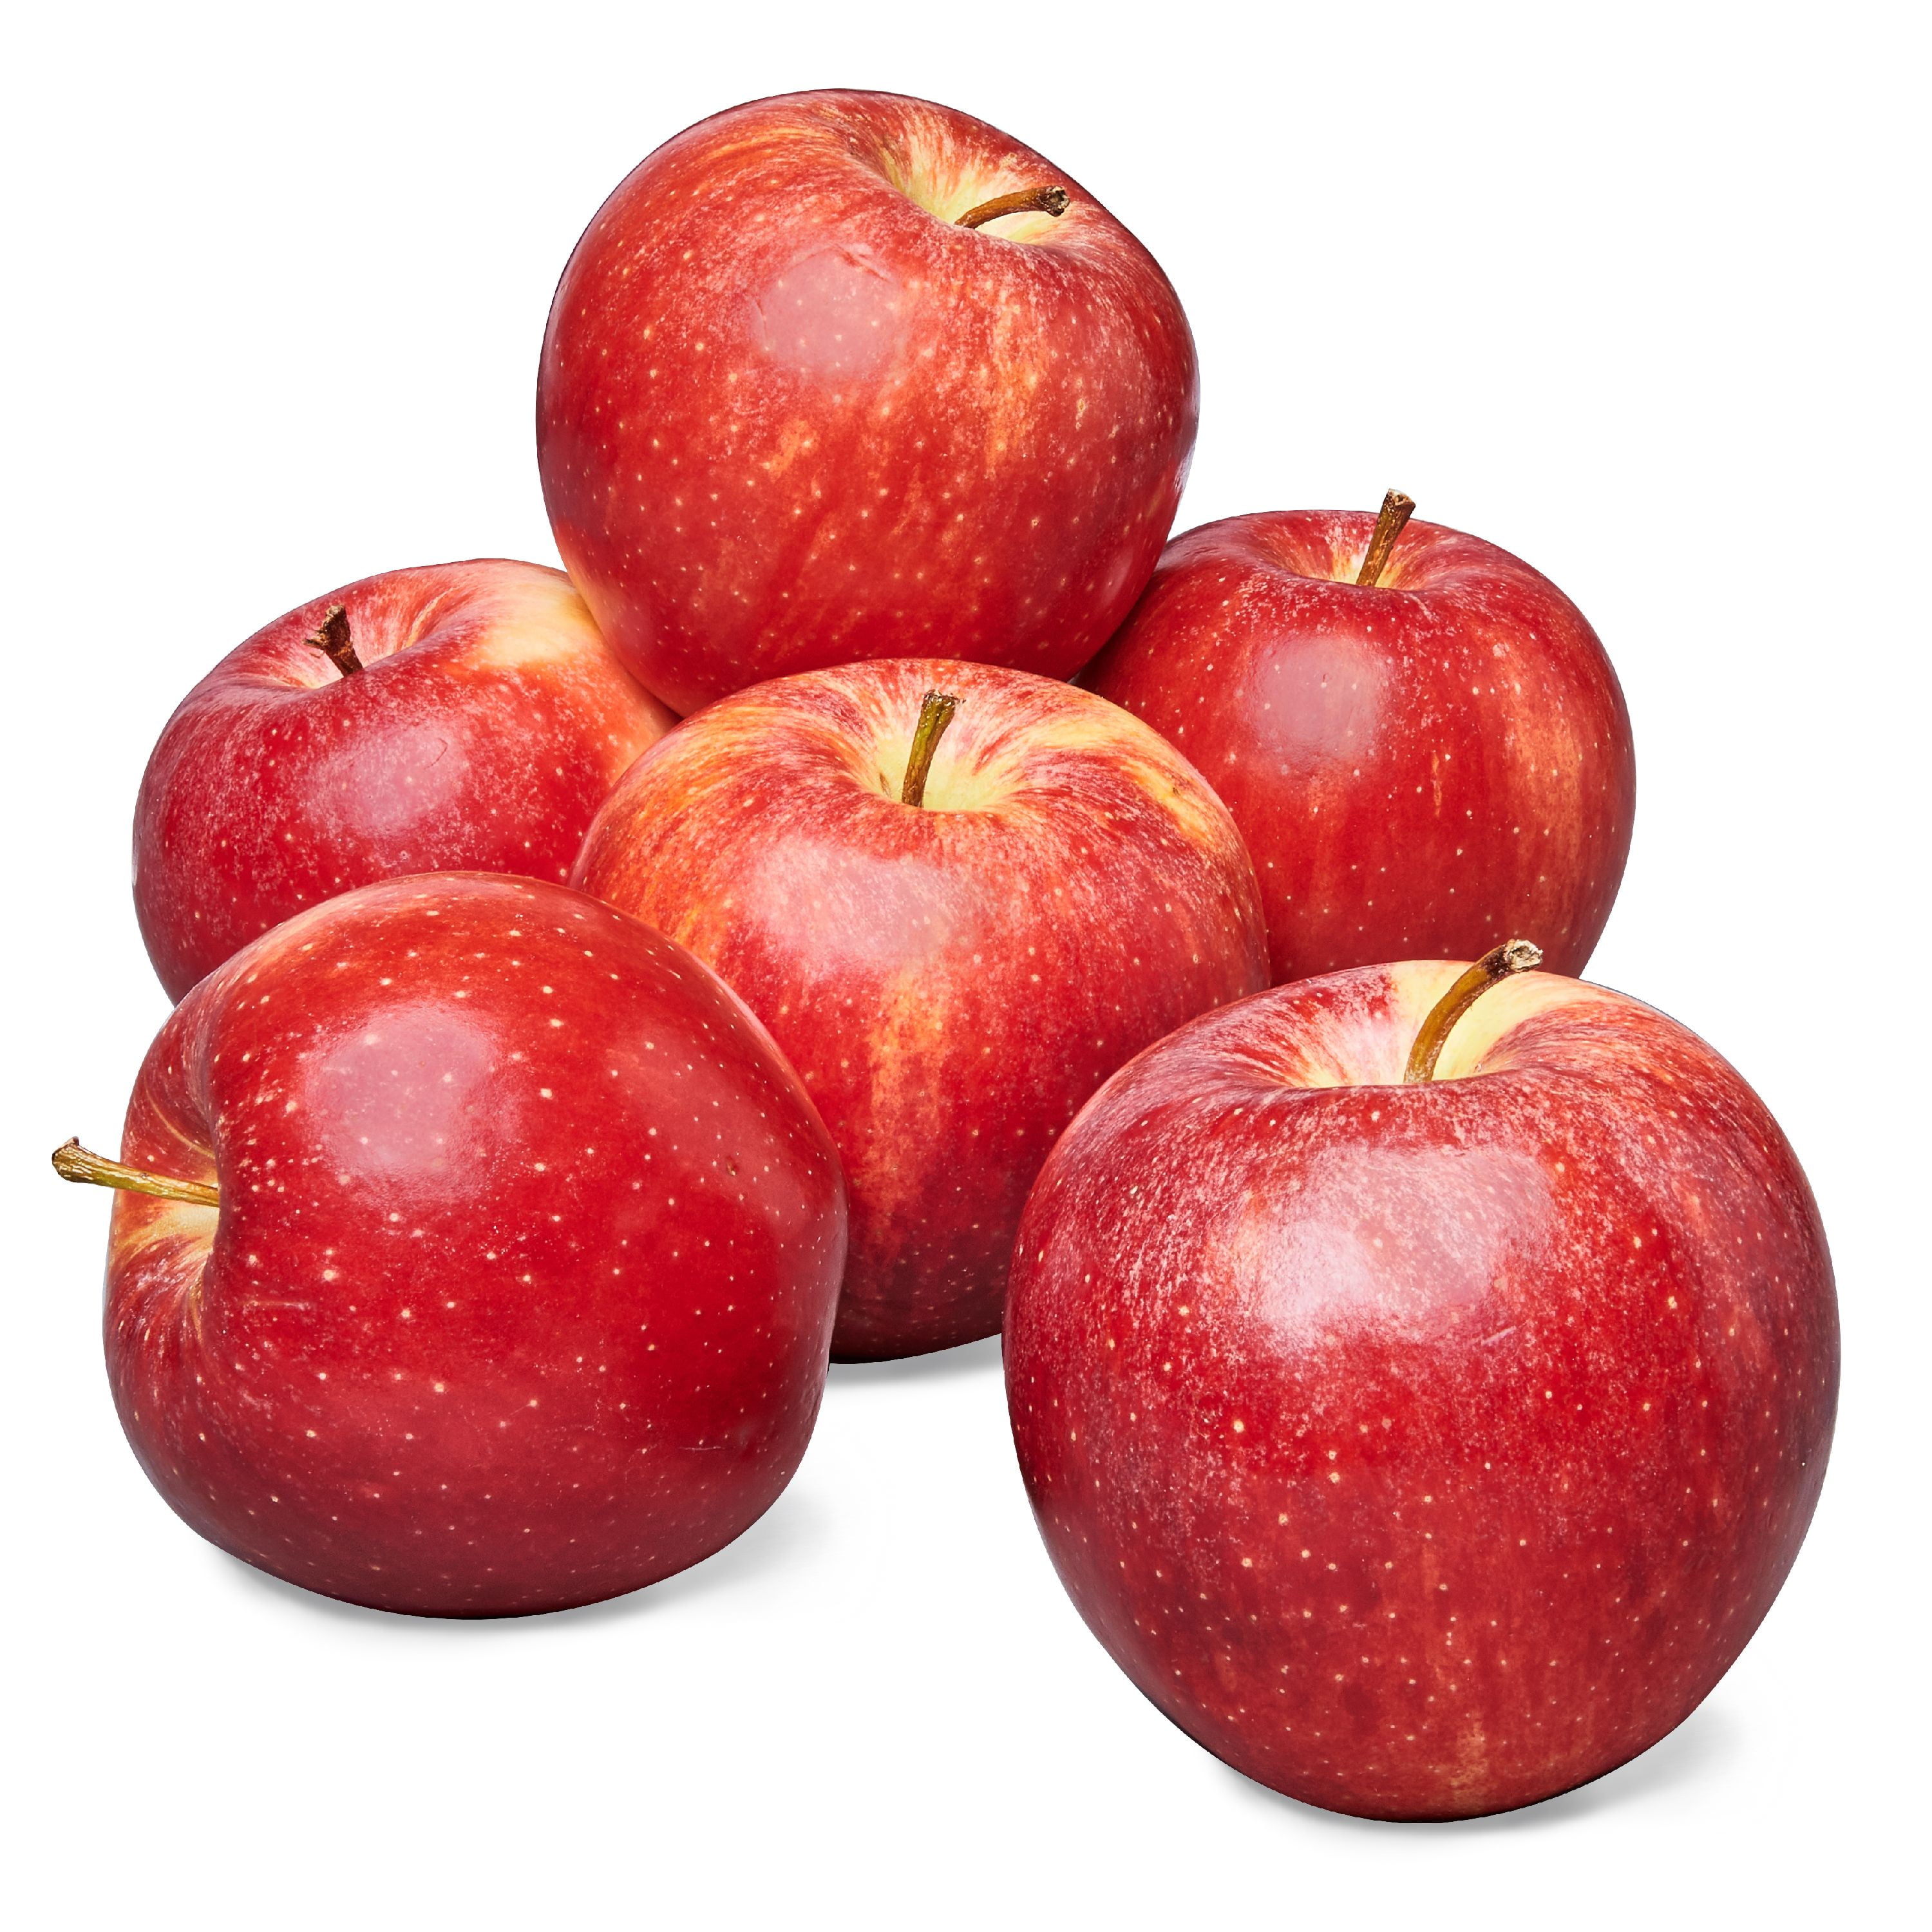 Apples Gala - apx 1/2 lb